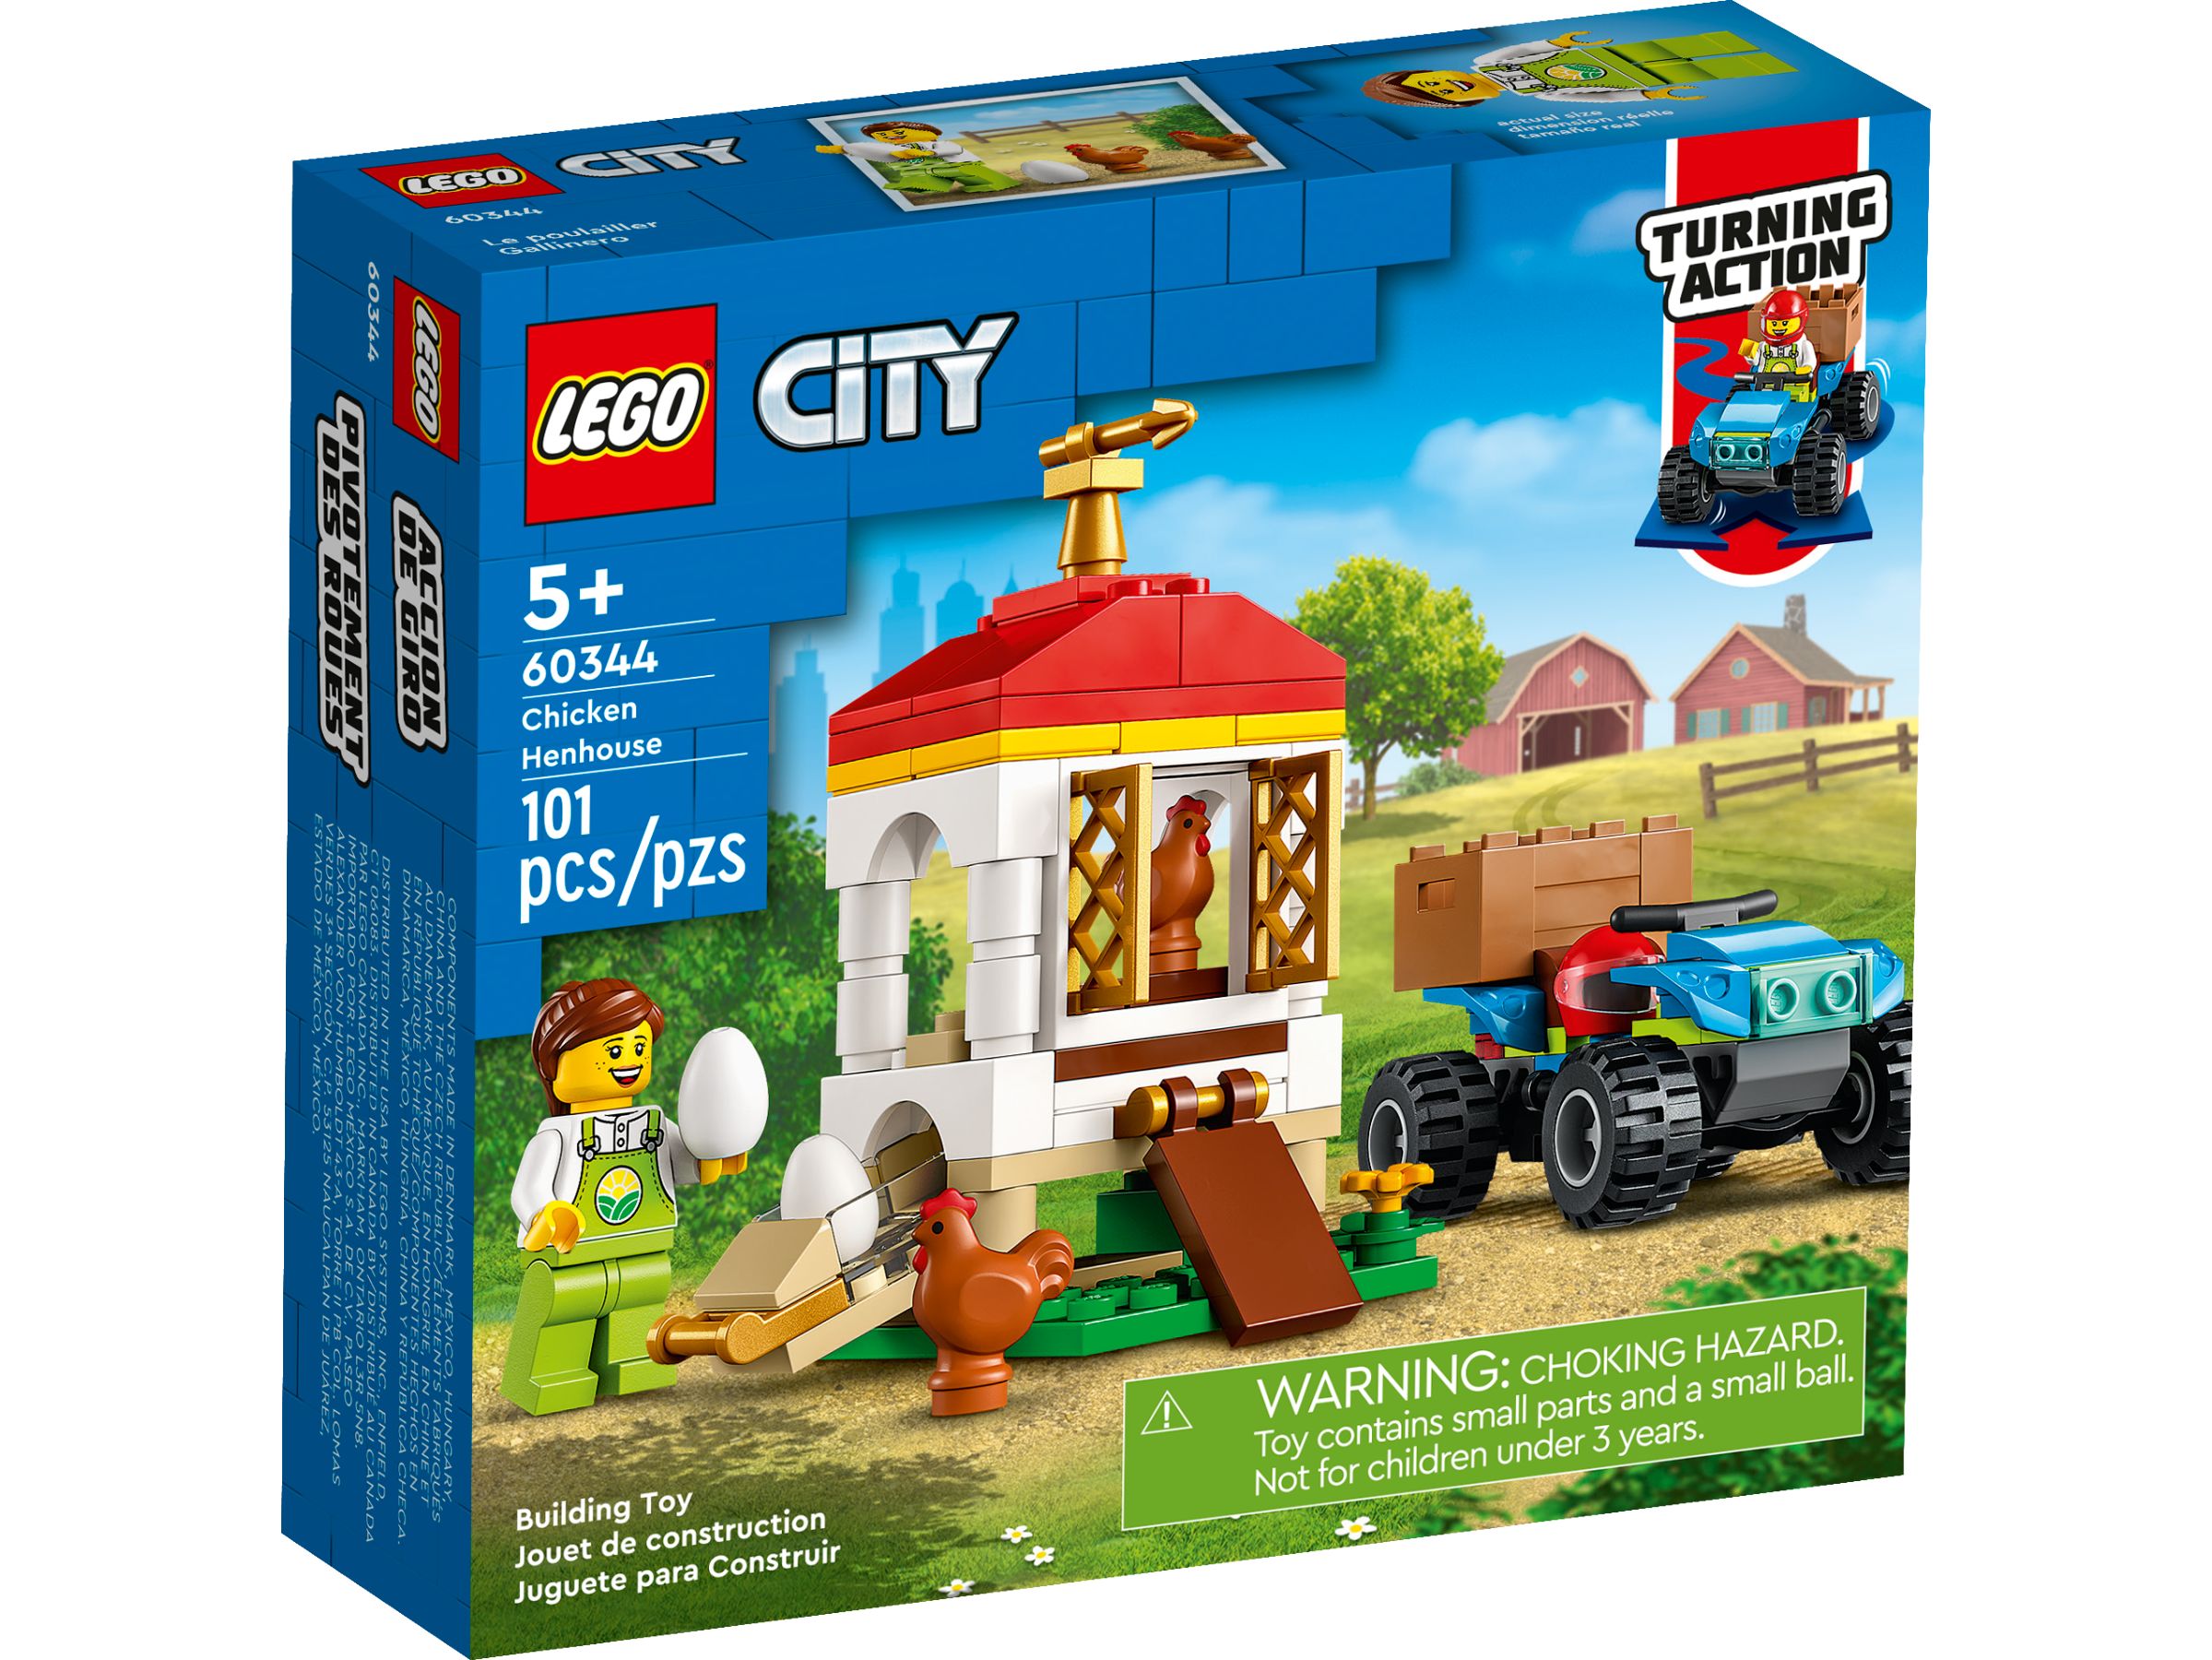 LEGO City 60344 Hühnerstall LEGO_60344_alt1.jpg